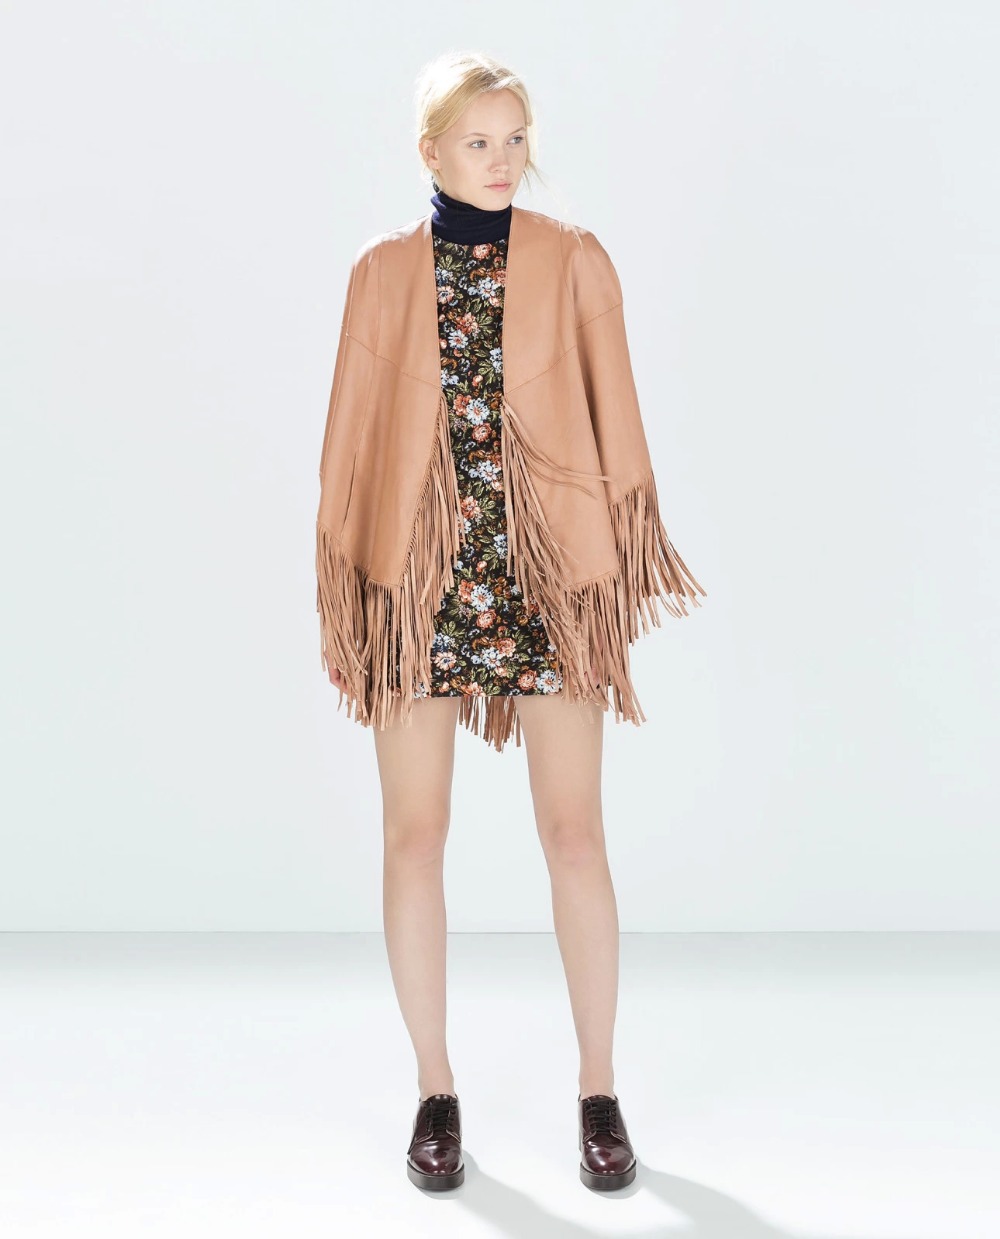 New Fashion Women Elegant Cloak Tassel pocket Leather Coats Casual jacket brand designer Tops